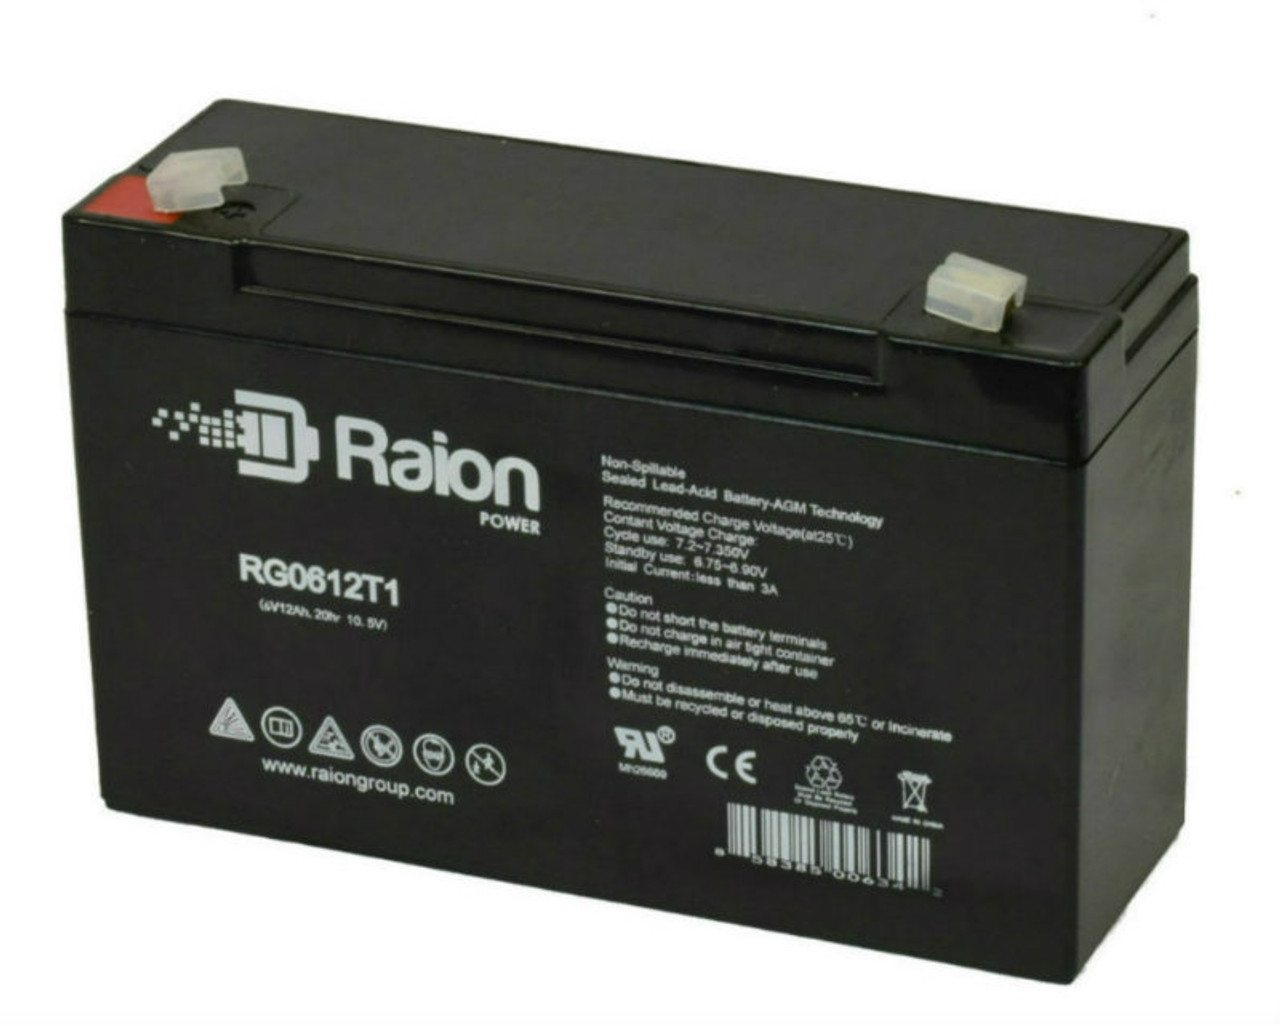 Raion Power RG06120T1 Replacement 6V 12Ah Emergency Light Battery for Sonnenschein 7190523